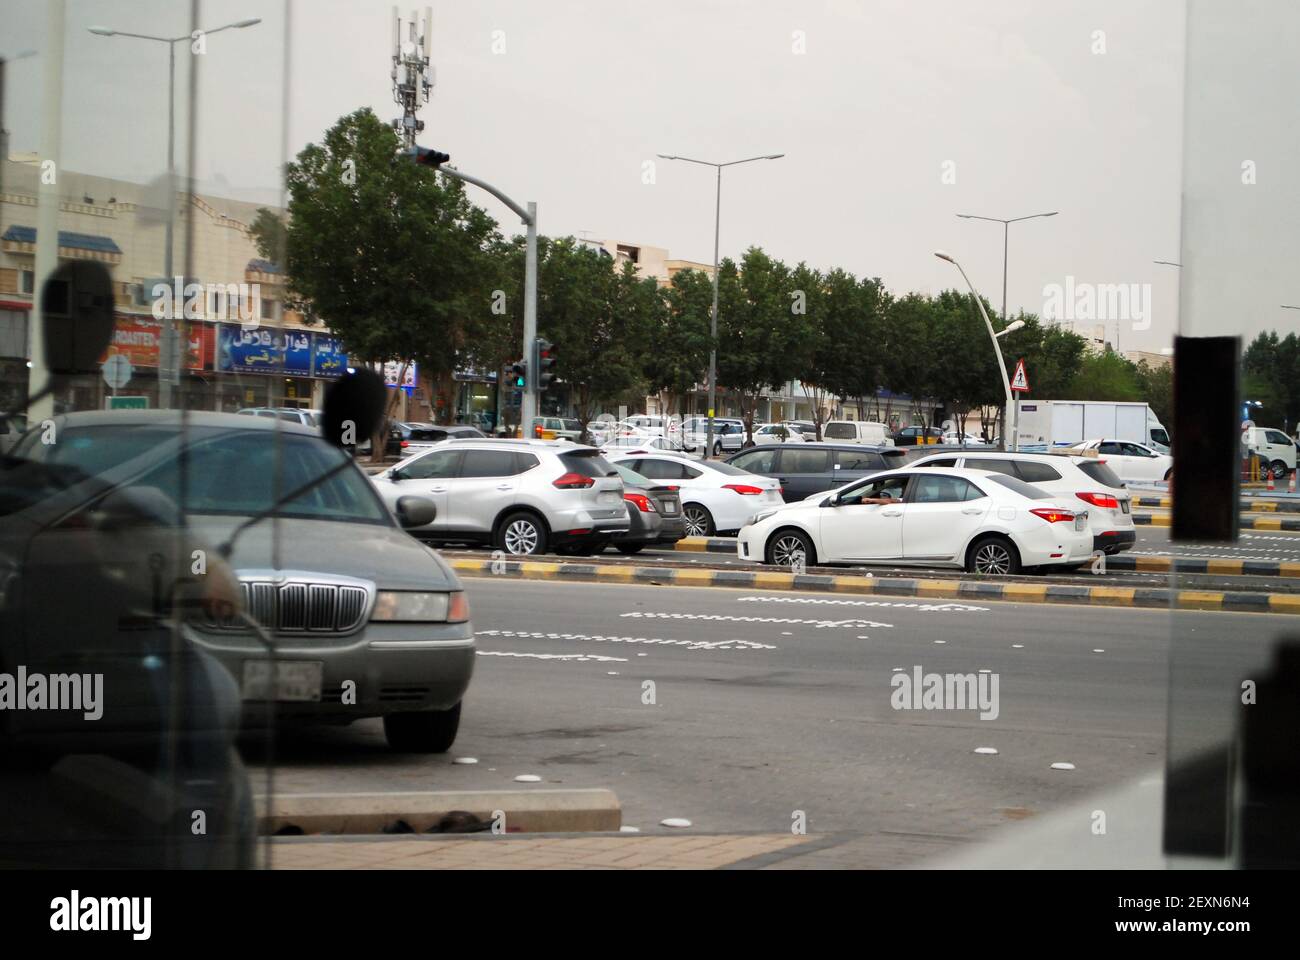 RIYADH, SAUDI ARABIA - Feb 18, 2021: traffic on road waiting for signal,trees and shops behind,beautiful cloudy weather Stock Photo